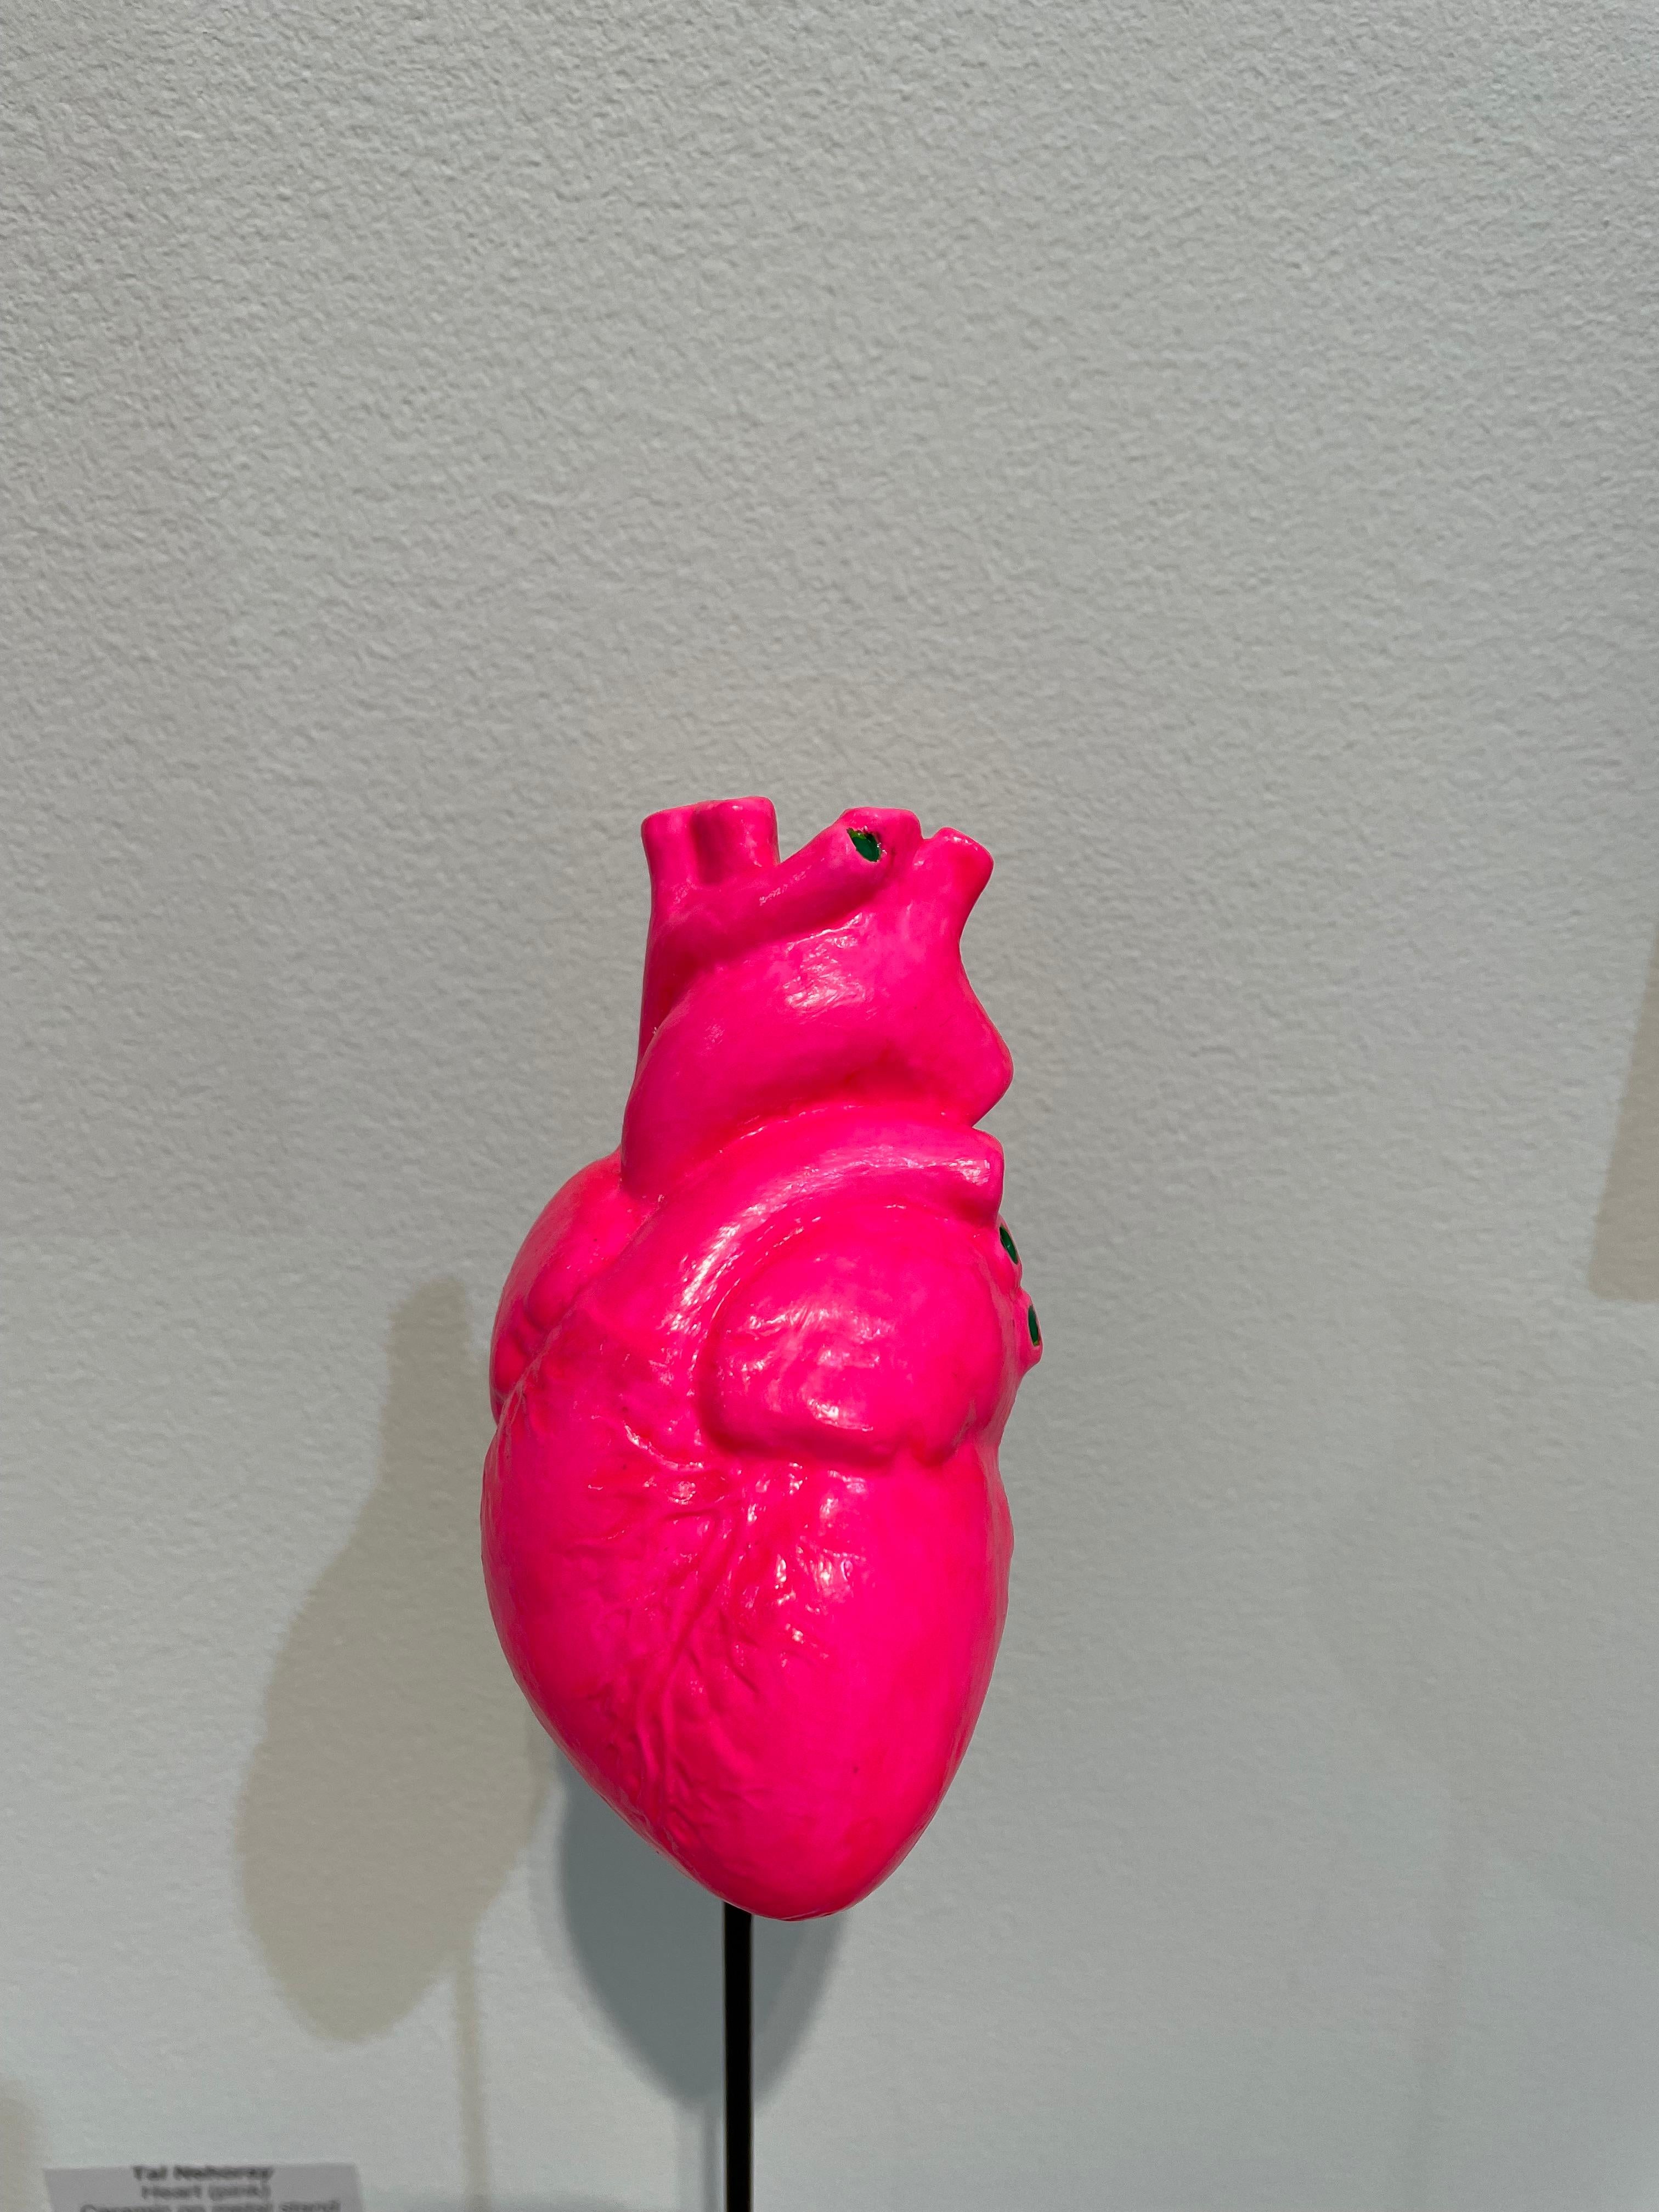 Tal Nehoray Figurative Sculpture - My trembling heart (pink) - figurative sculpture